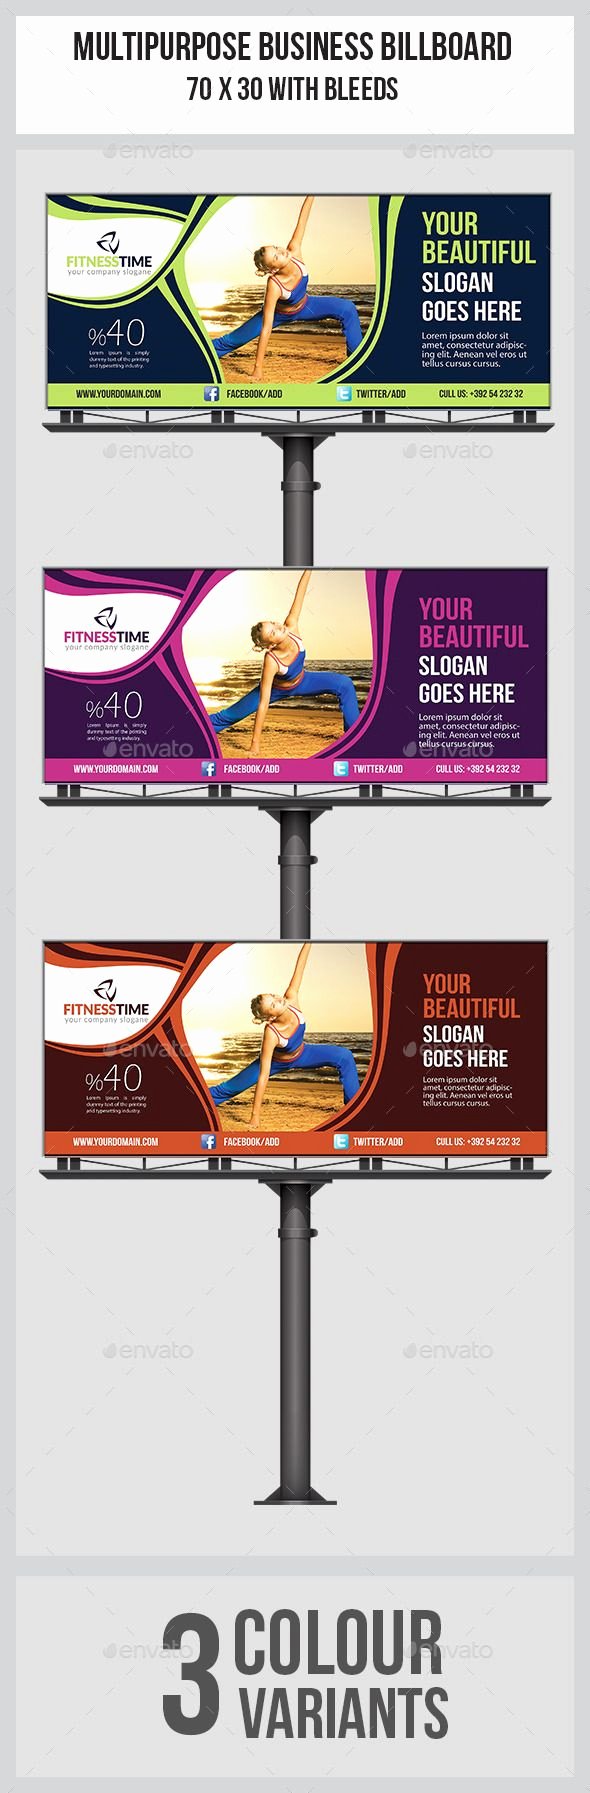 Billboard Design Template Free Inspirational Fitness Billboard Template